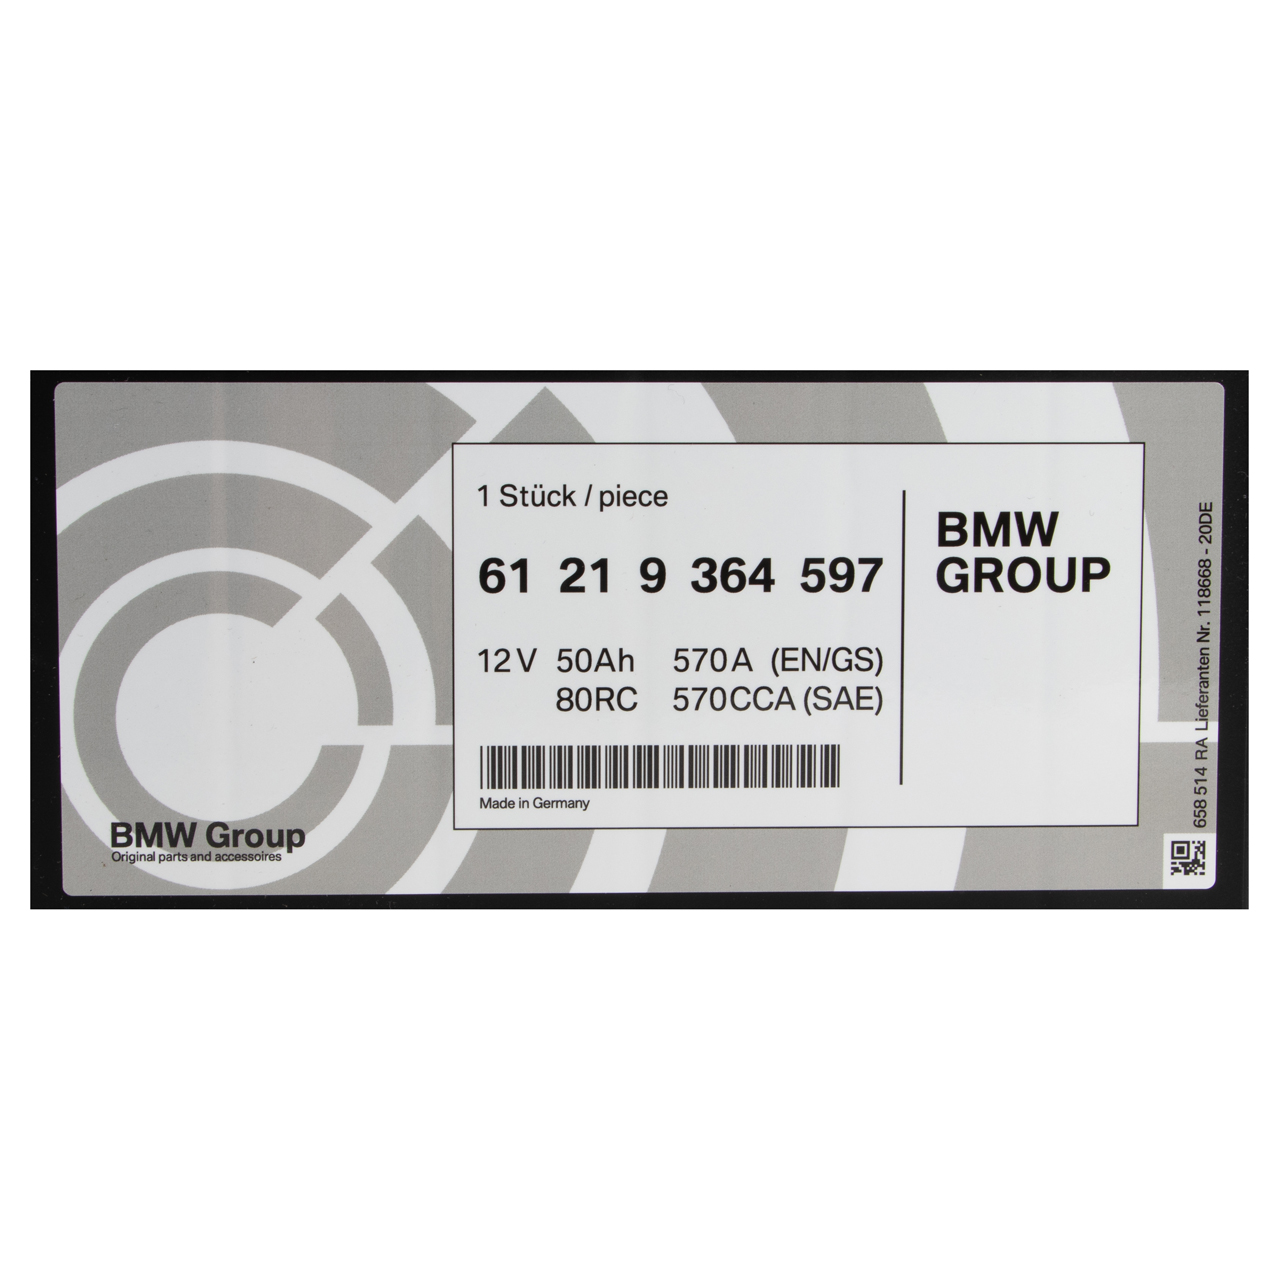 ORIGINAL BMW Autobatterie Batterie Starterbatterie 12V 50Ah 570A 61219364597